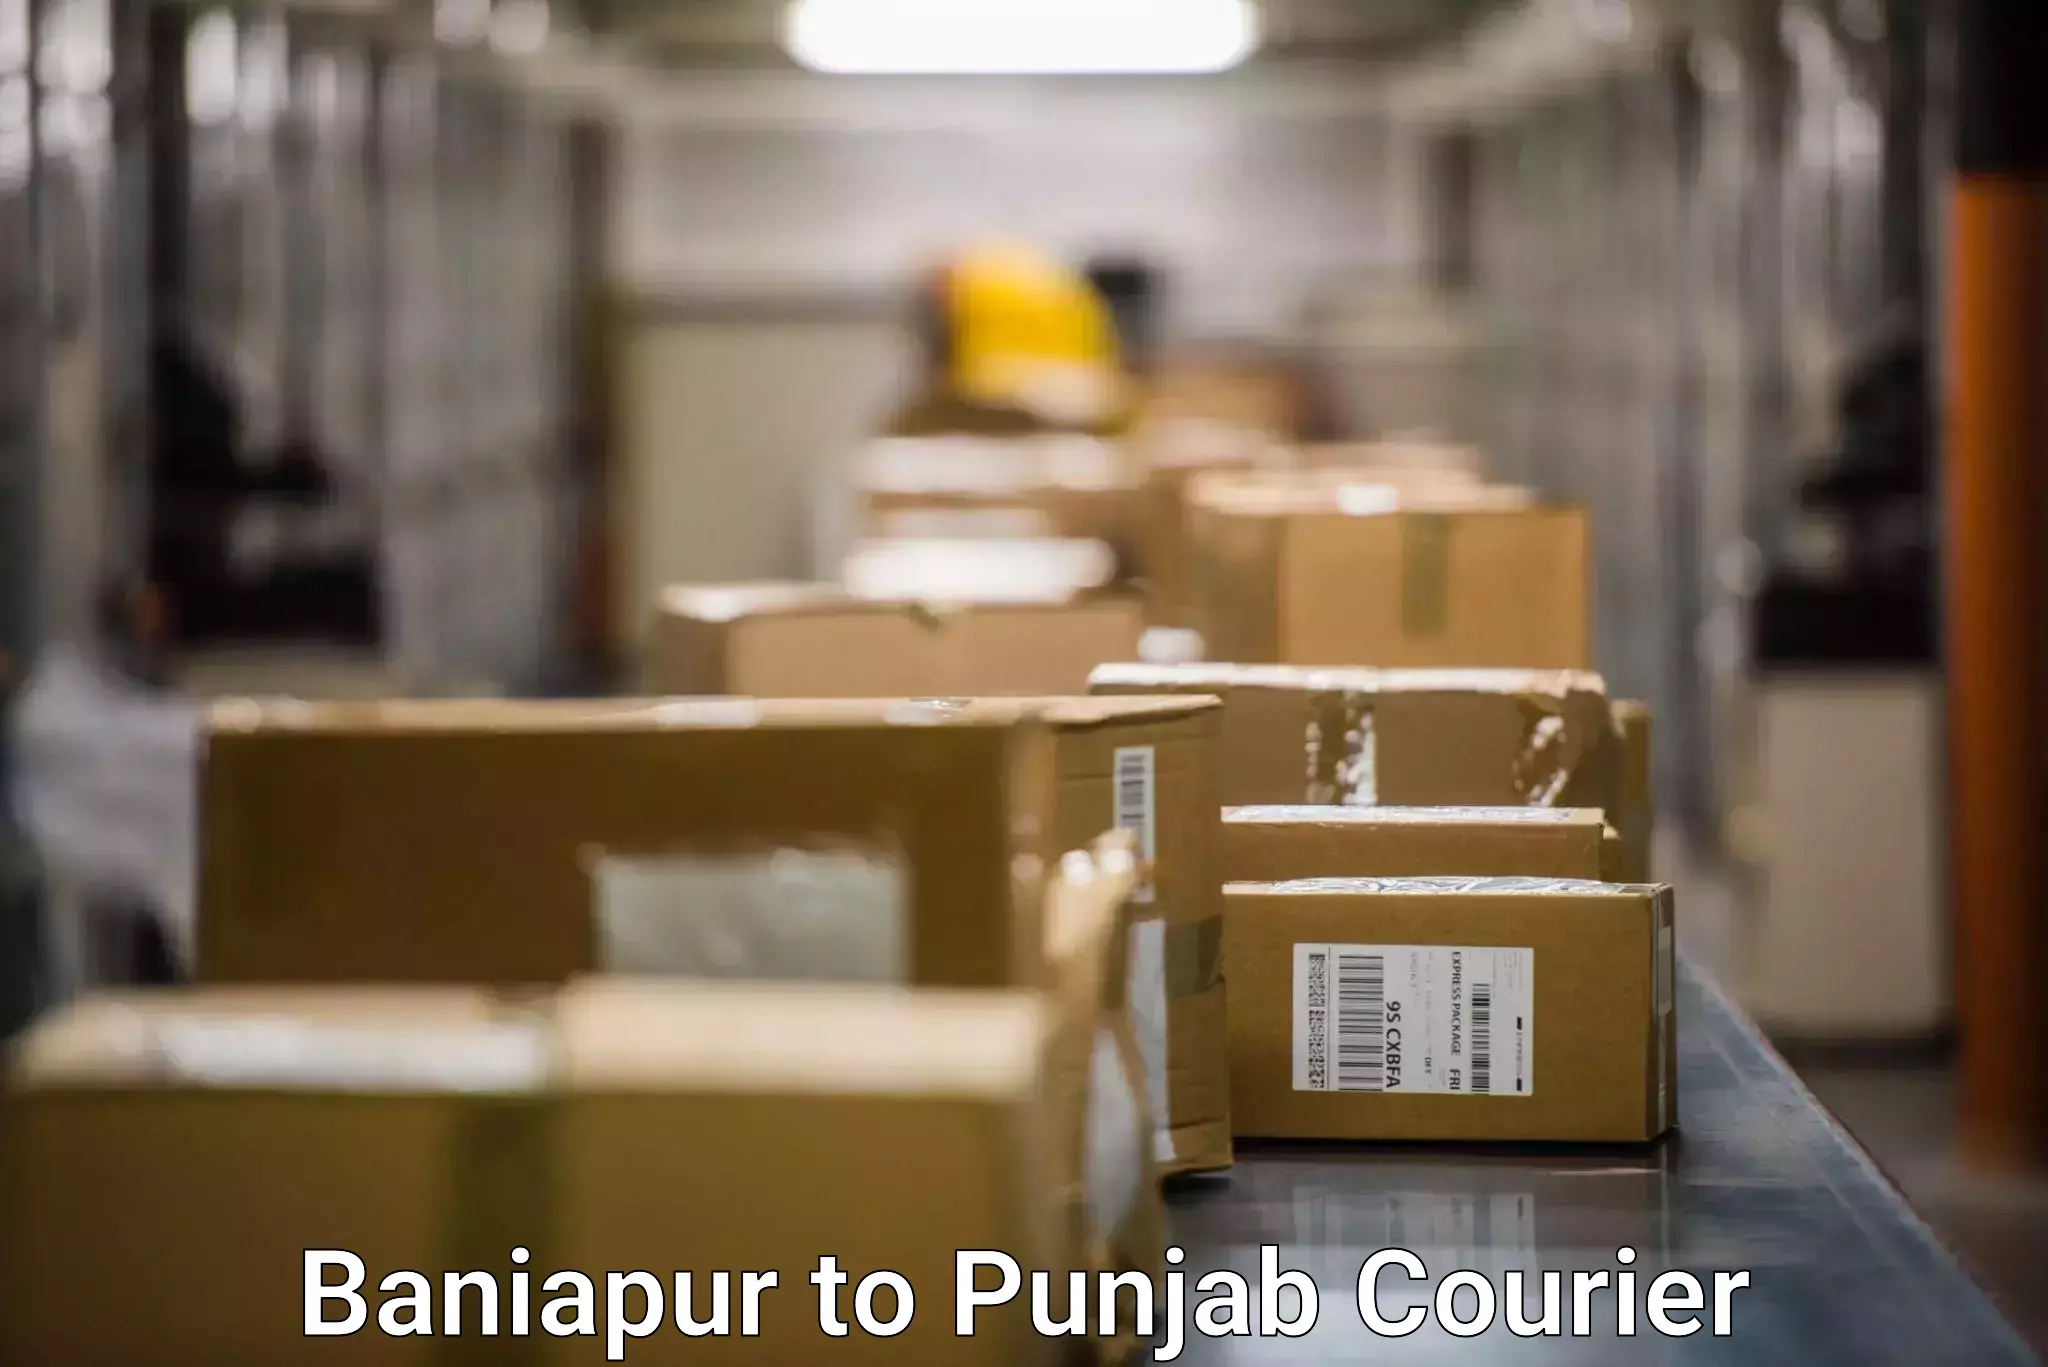 User-friendly courier app Baniapur to Punjab